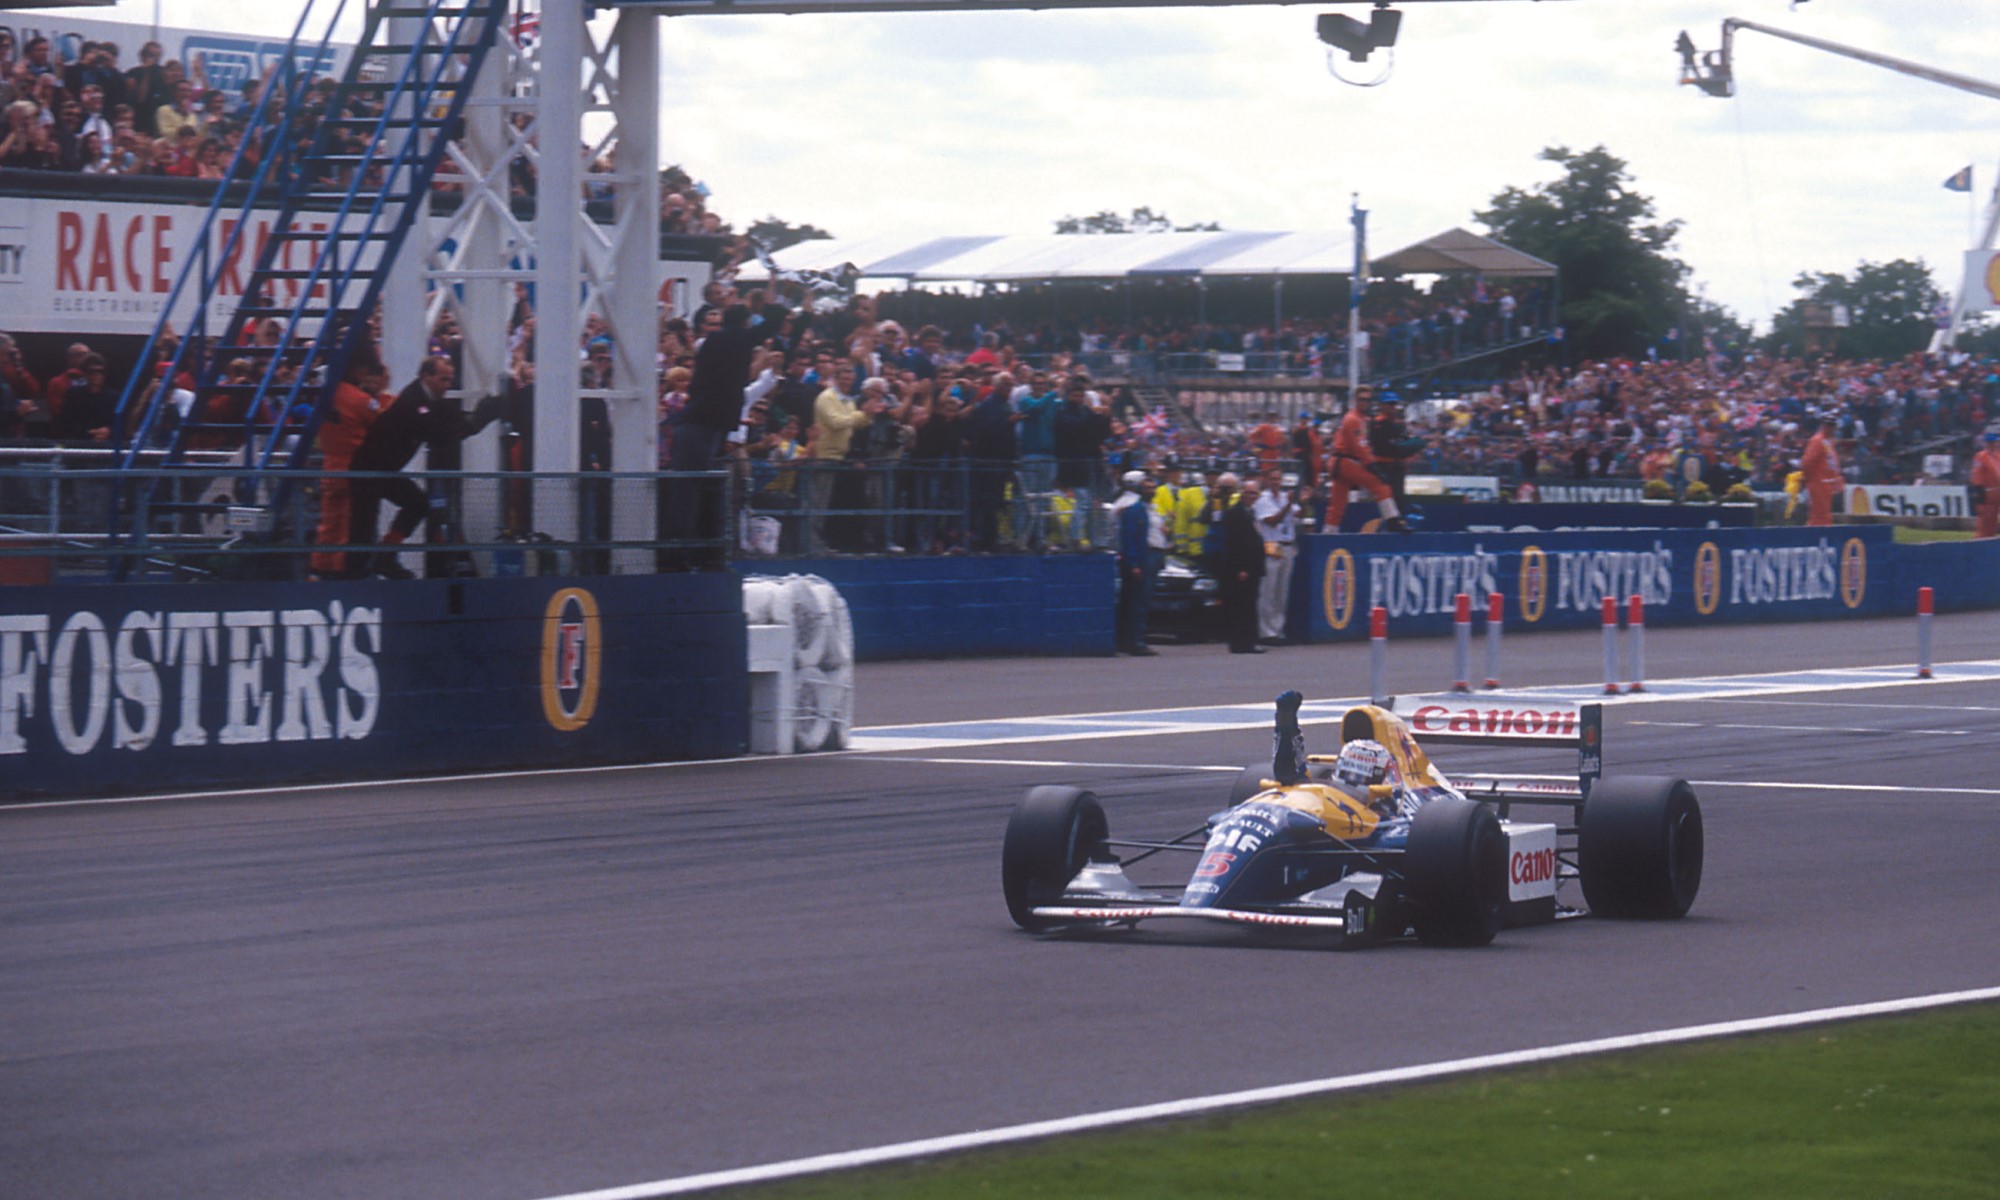 Mansell winning at Silverstone